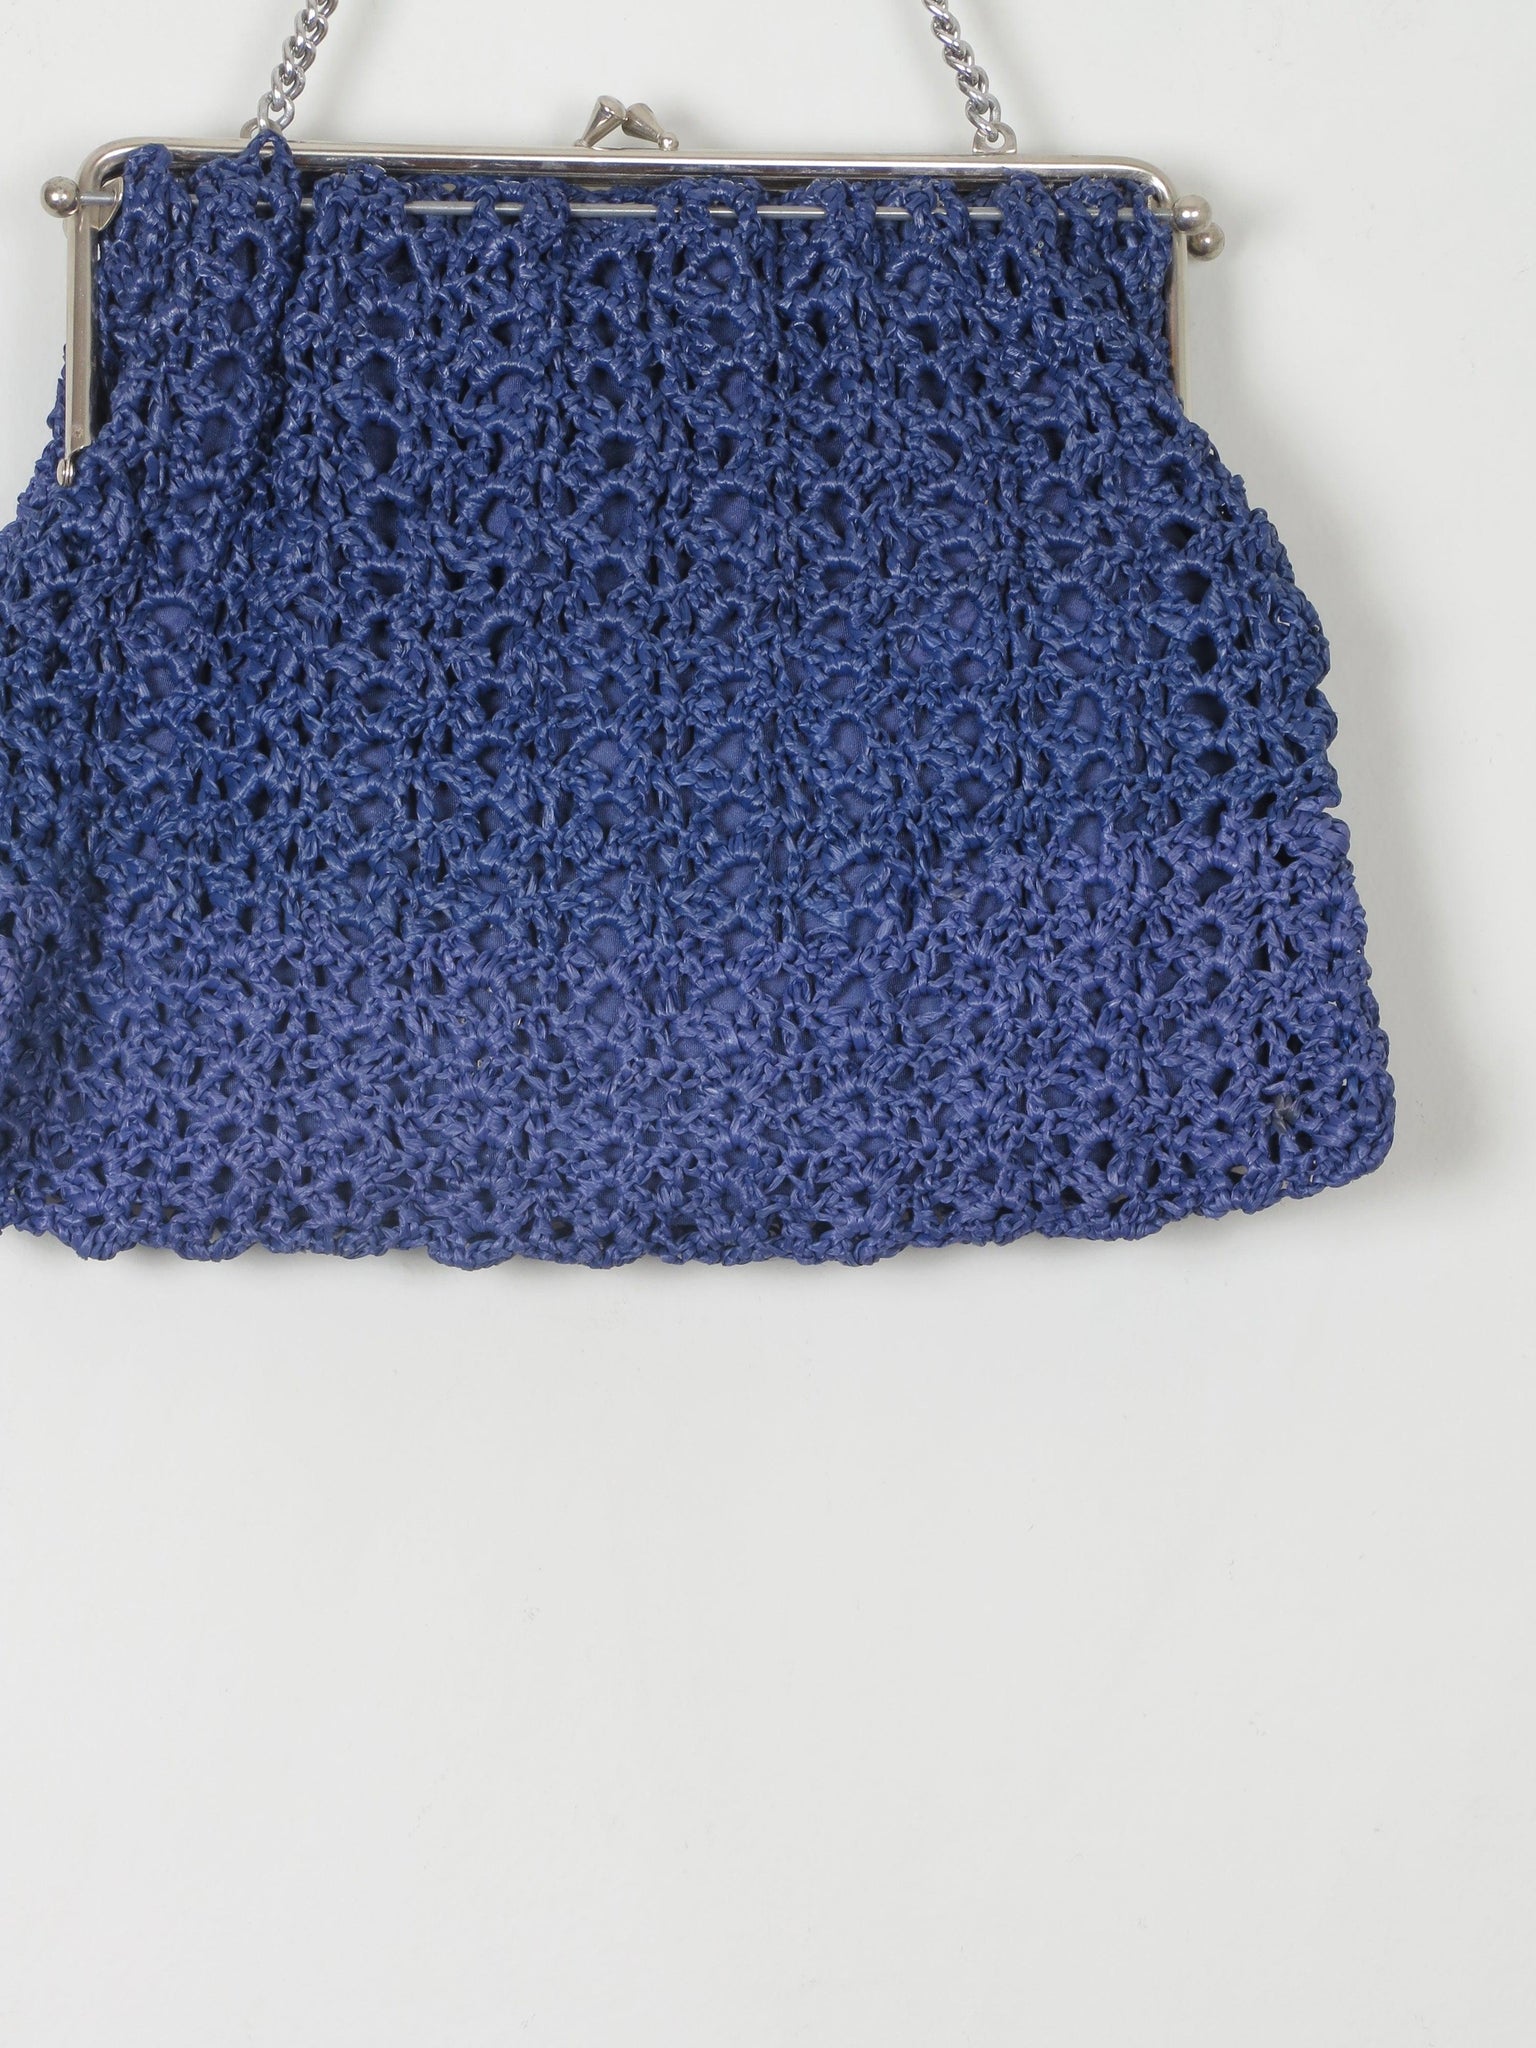 Medium Size Blue/Navy Vintage Crochet Hand Bag With Metal Frame - The Harlequin